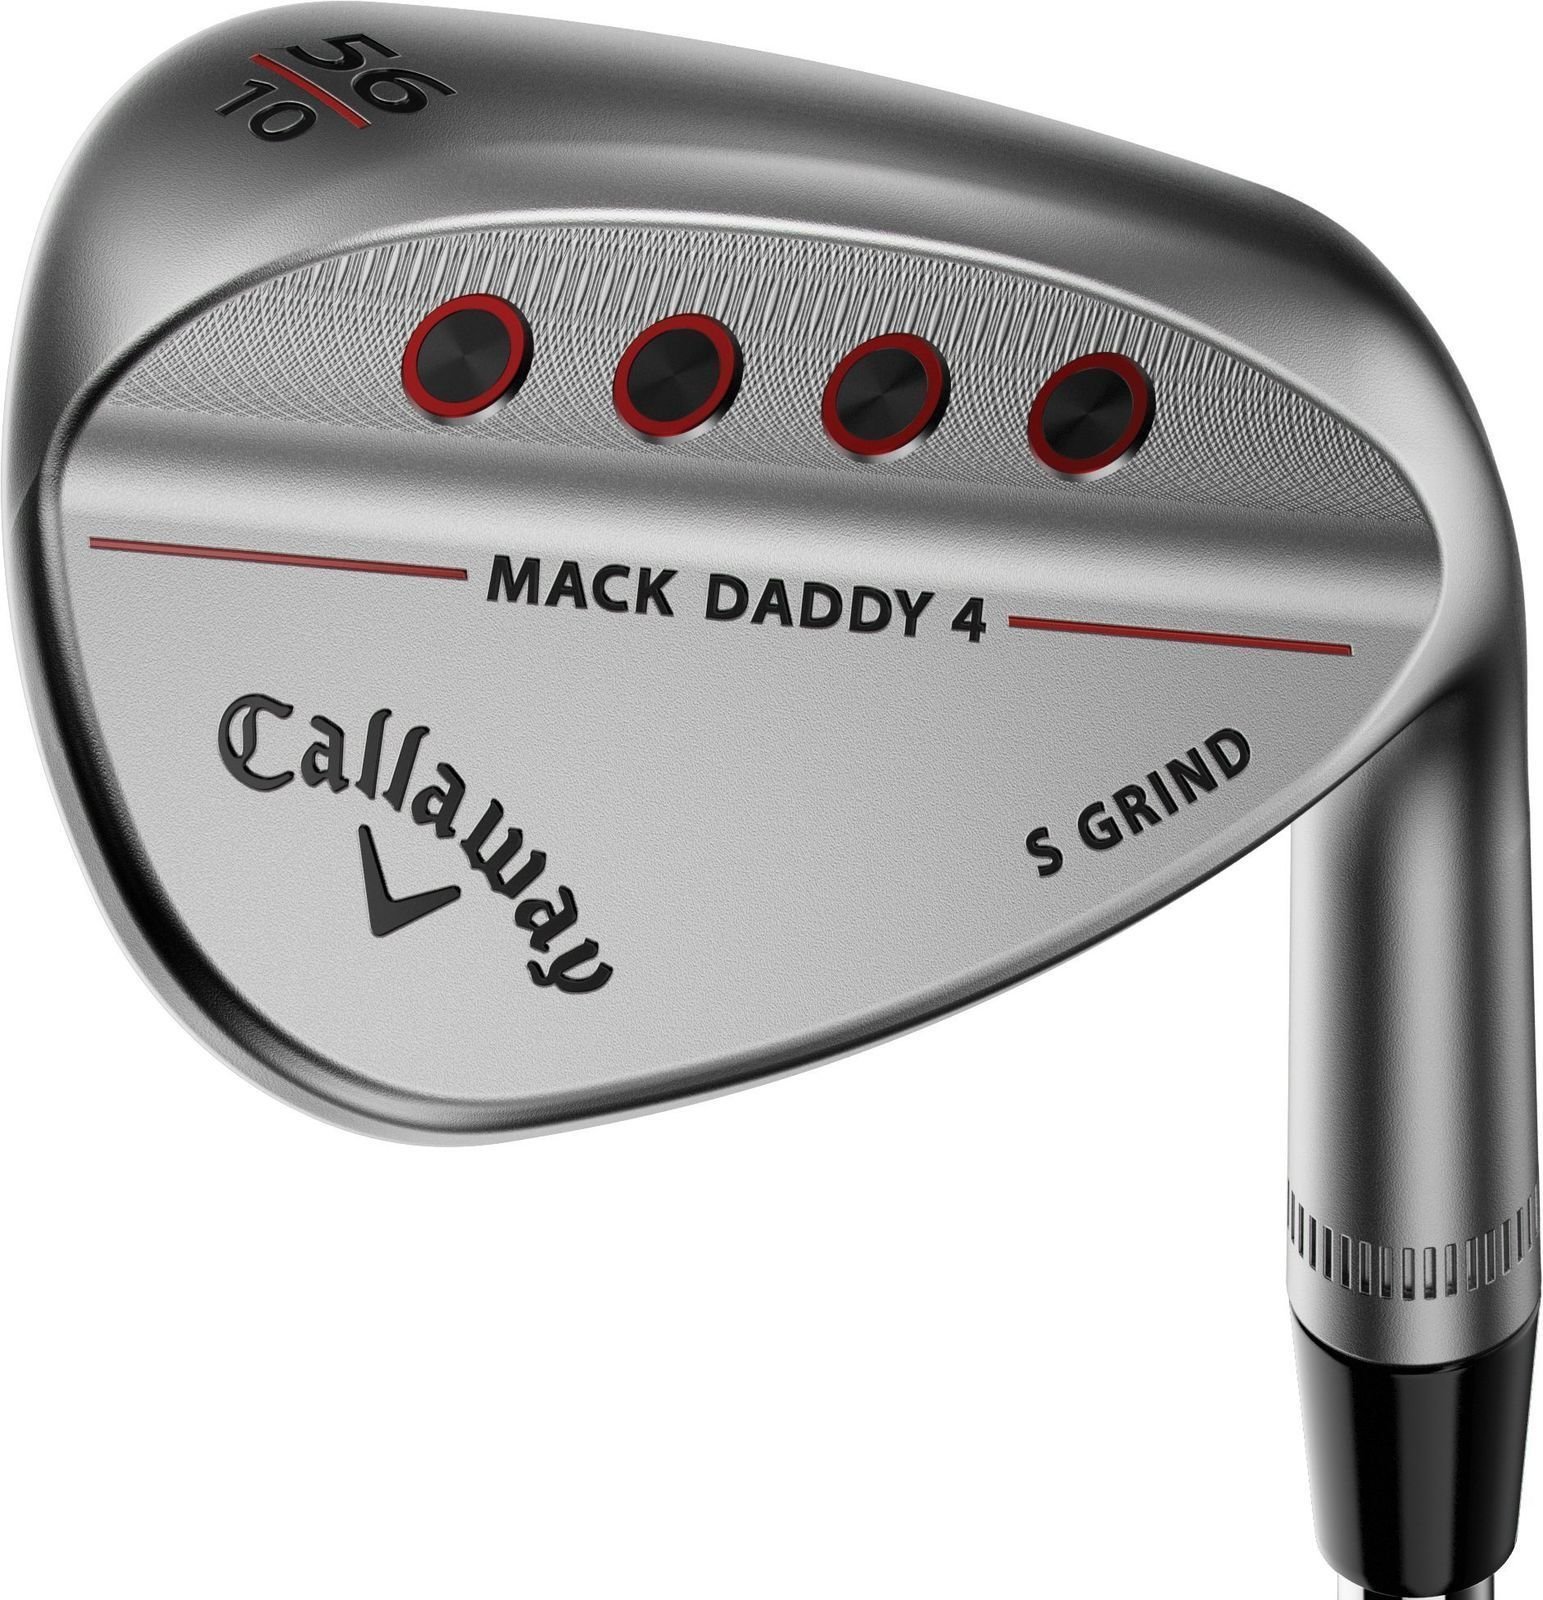 Mazza da golf - wedge Callaway Mack Daddy 4 Chrome Wedge 60-12 X-Grind destro